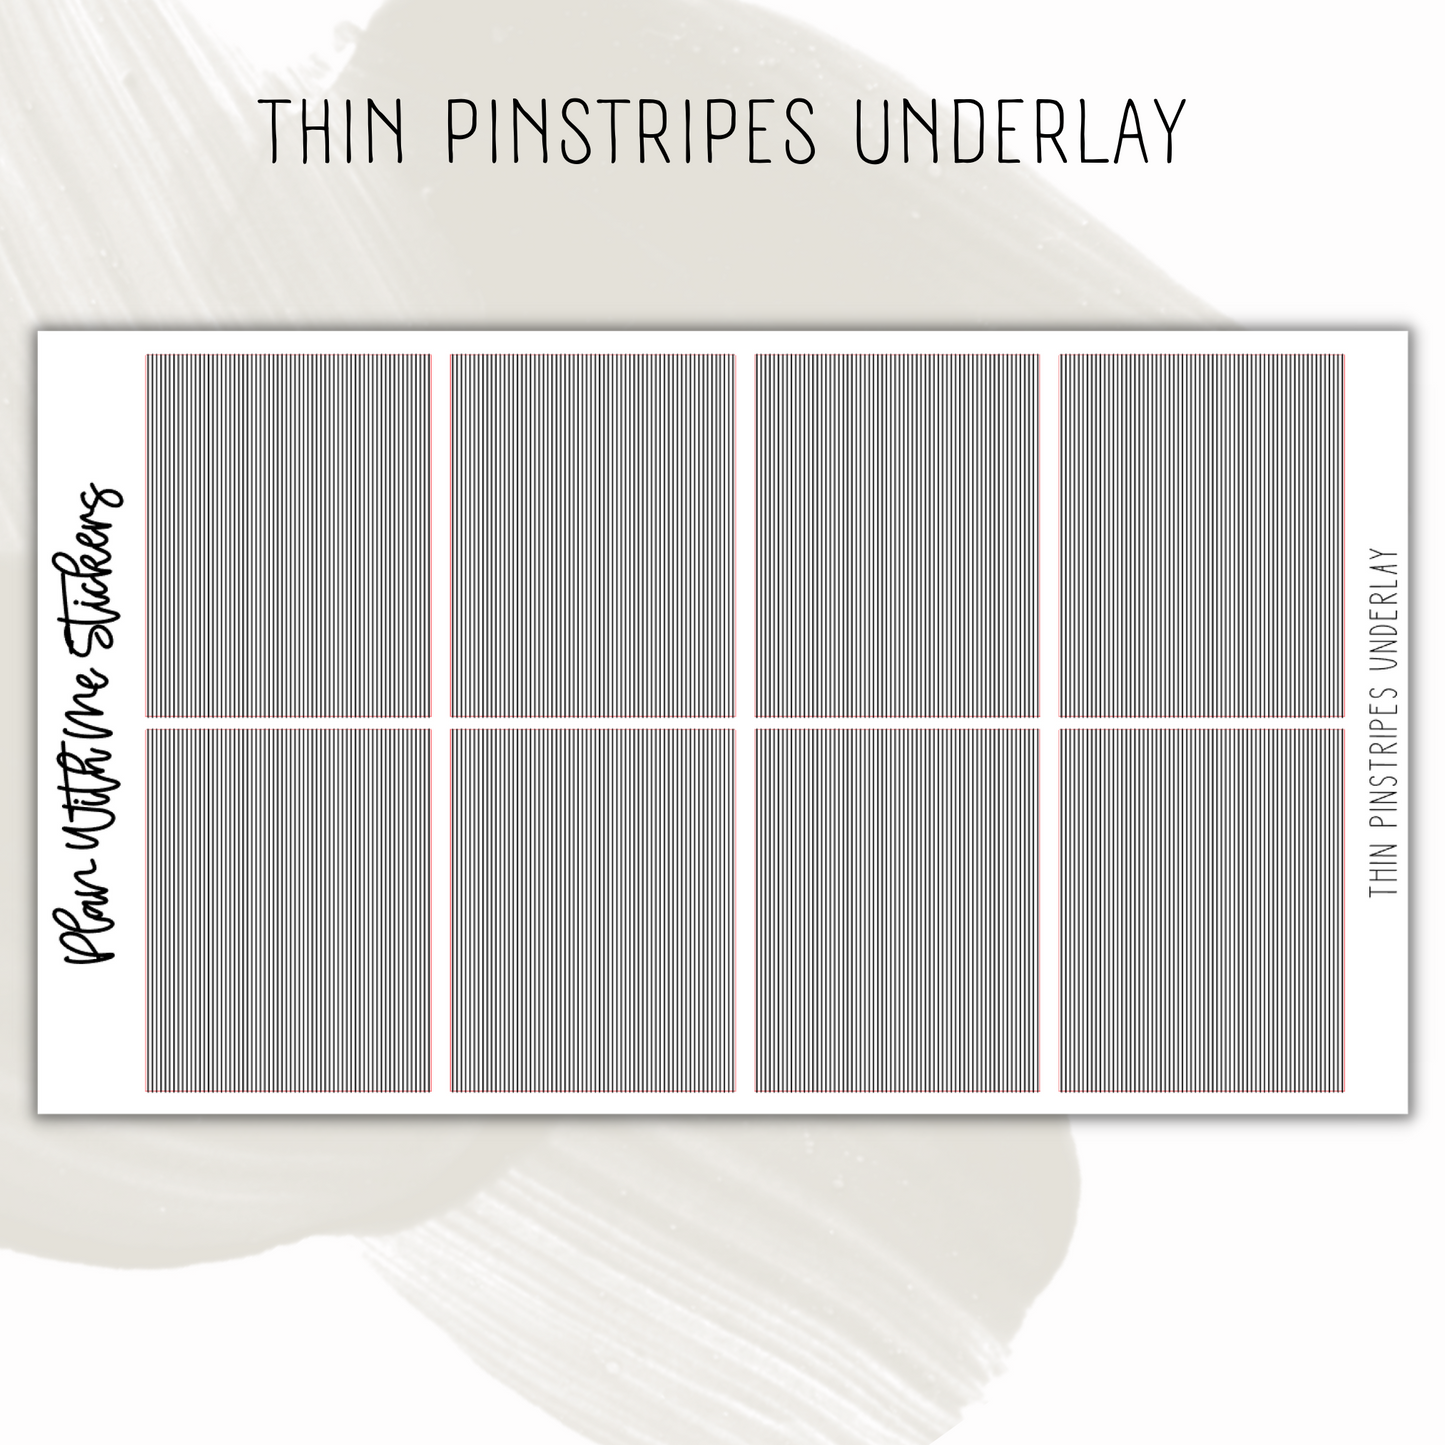 Thin Pinstripes Underlay